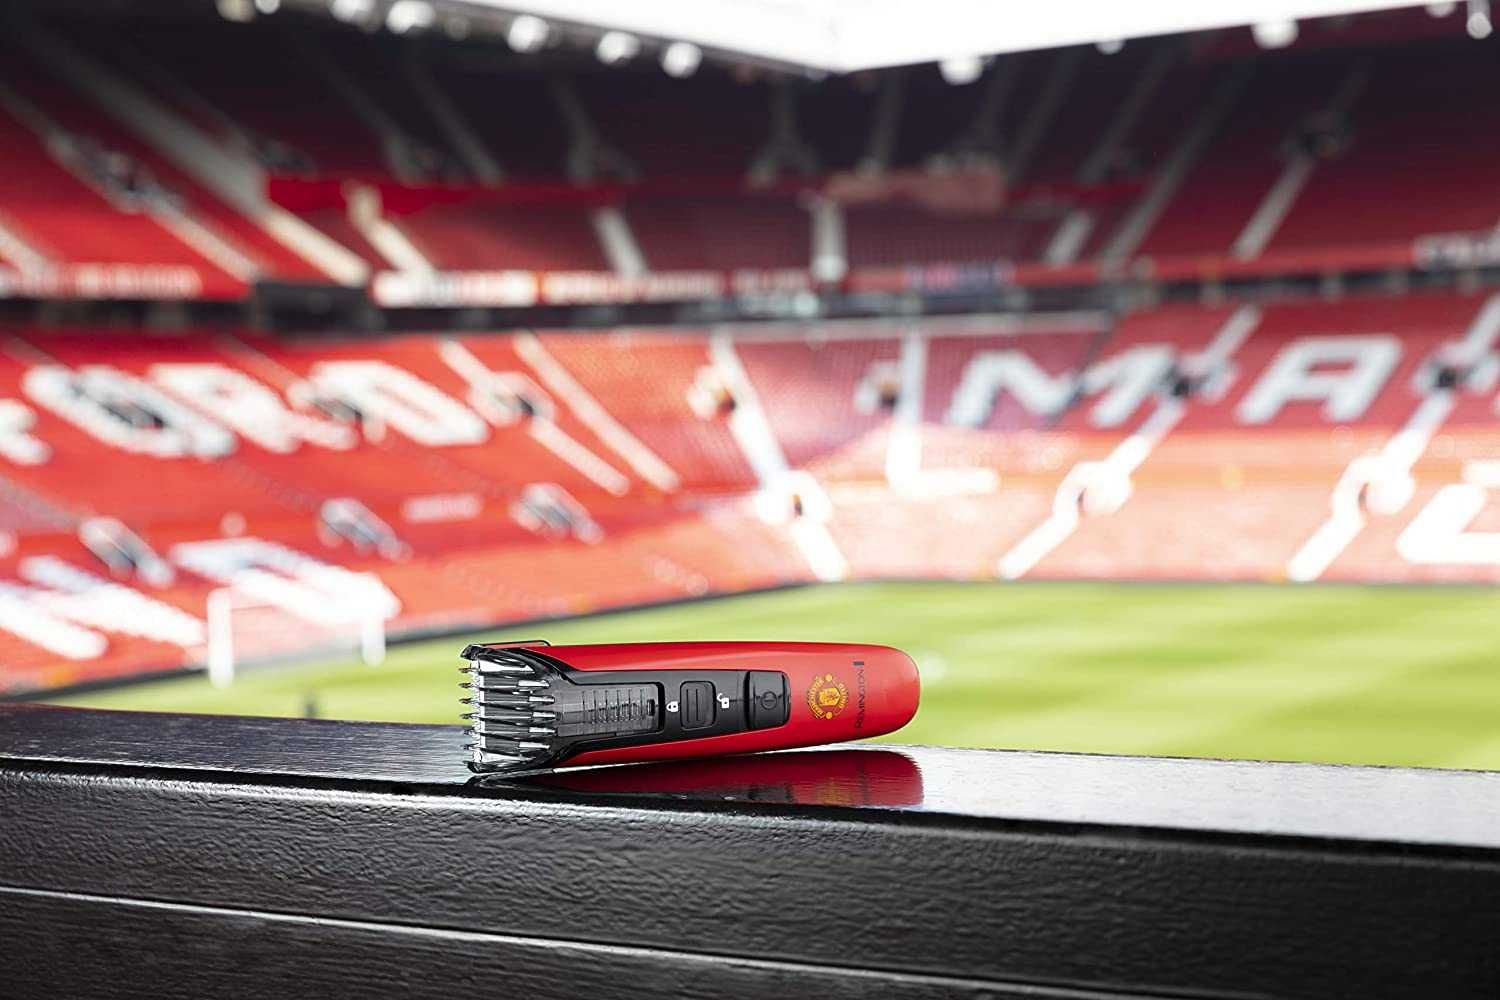 Máquina barba / cabelo Remington trimmer oficial Manchester United